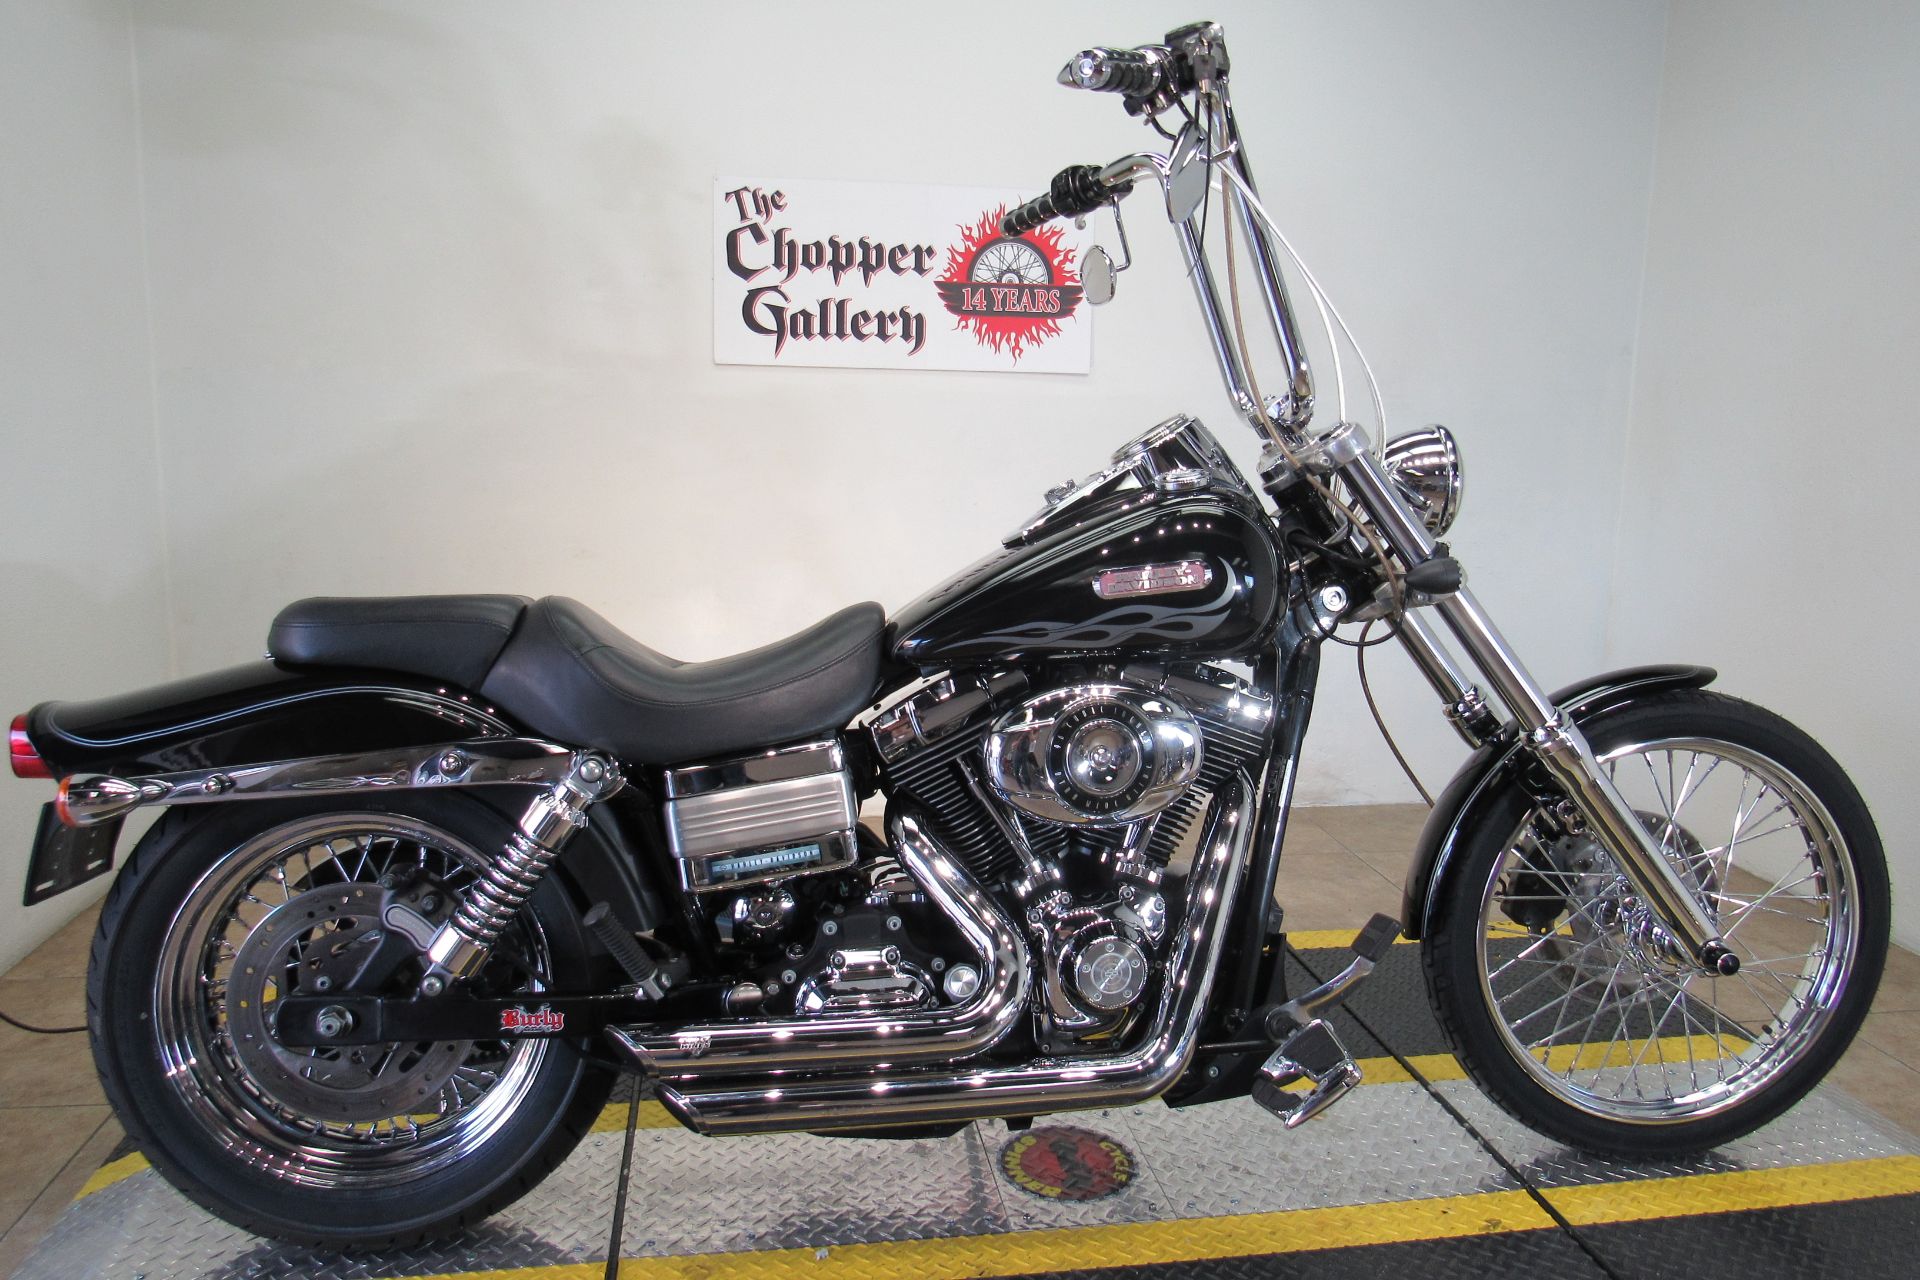 2007 Harley-Davidson Dyna® Wide Glide® in Temecula, California - Photo 5